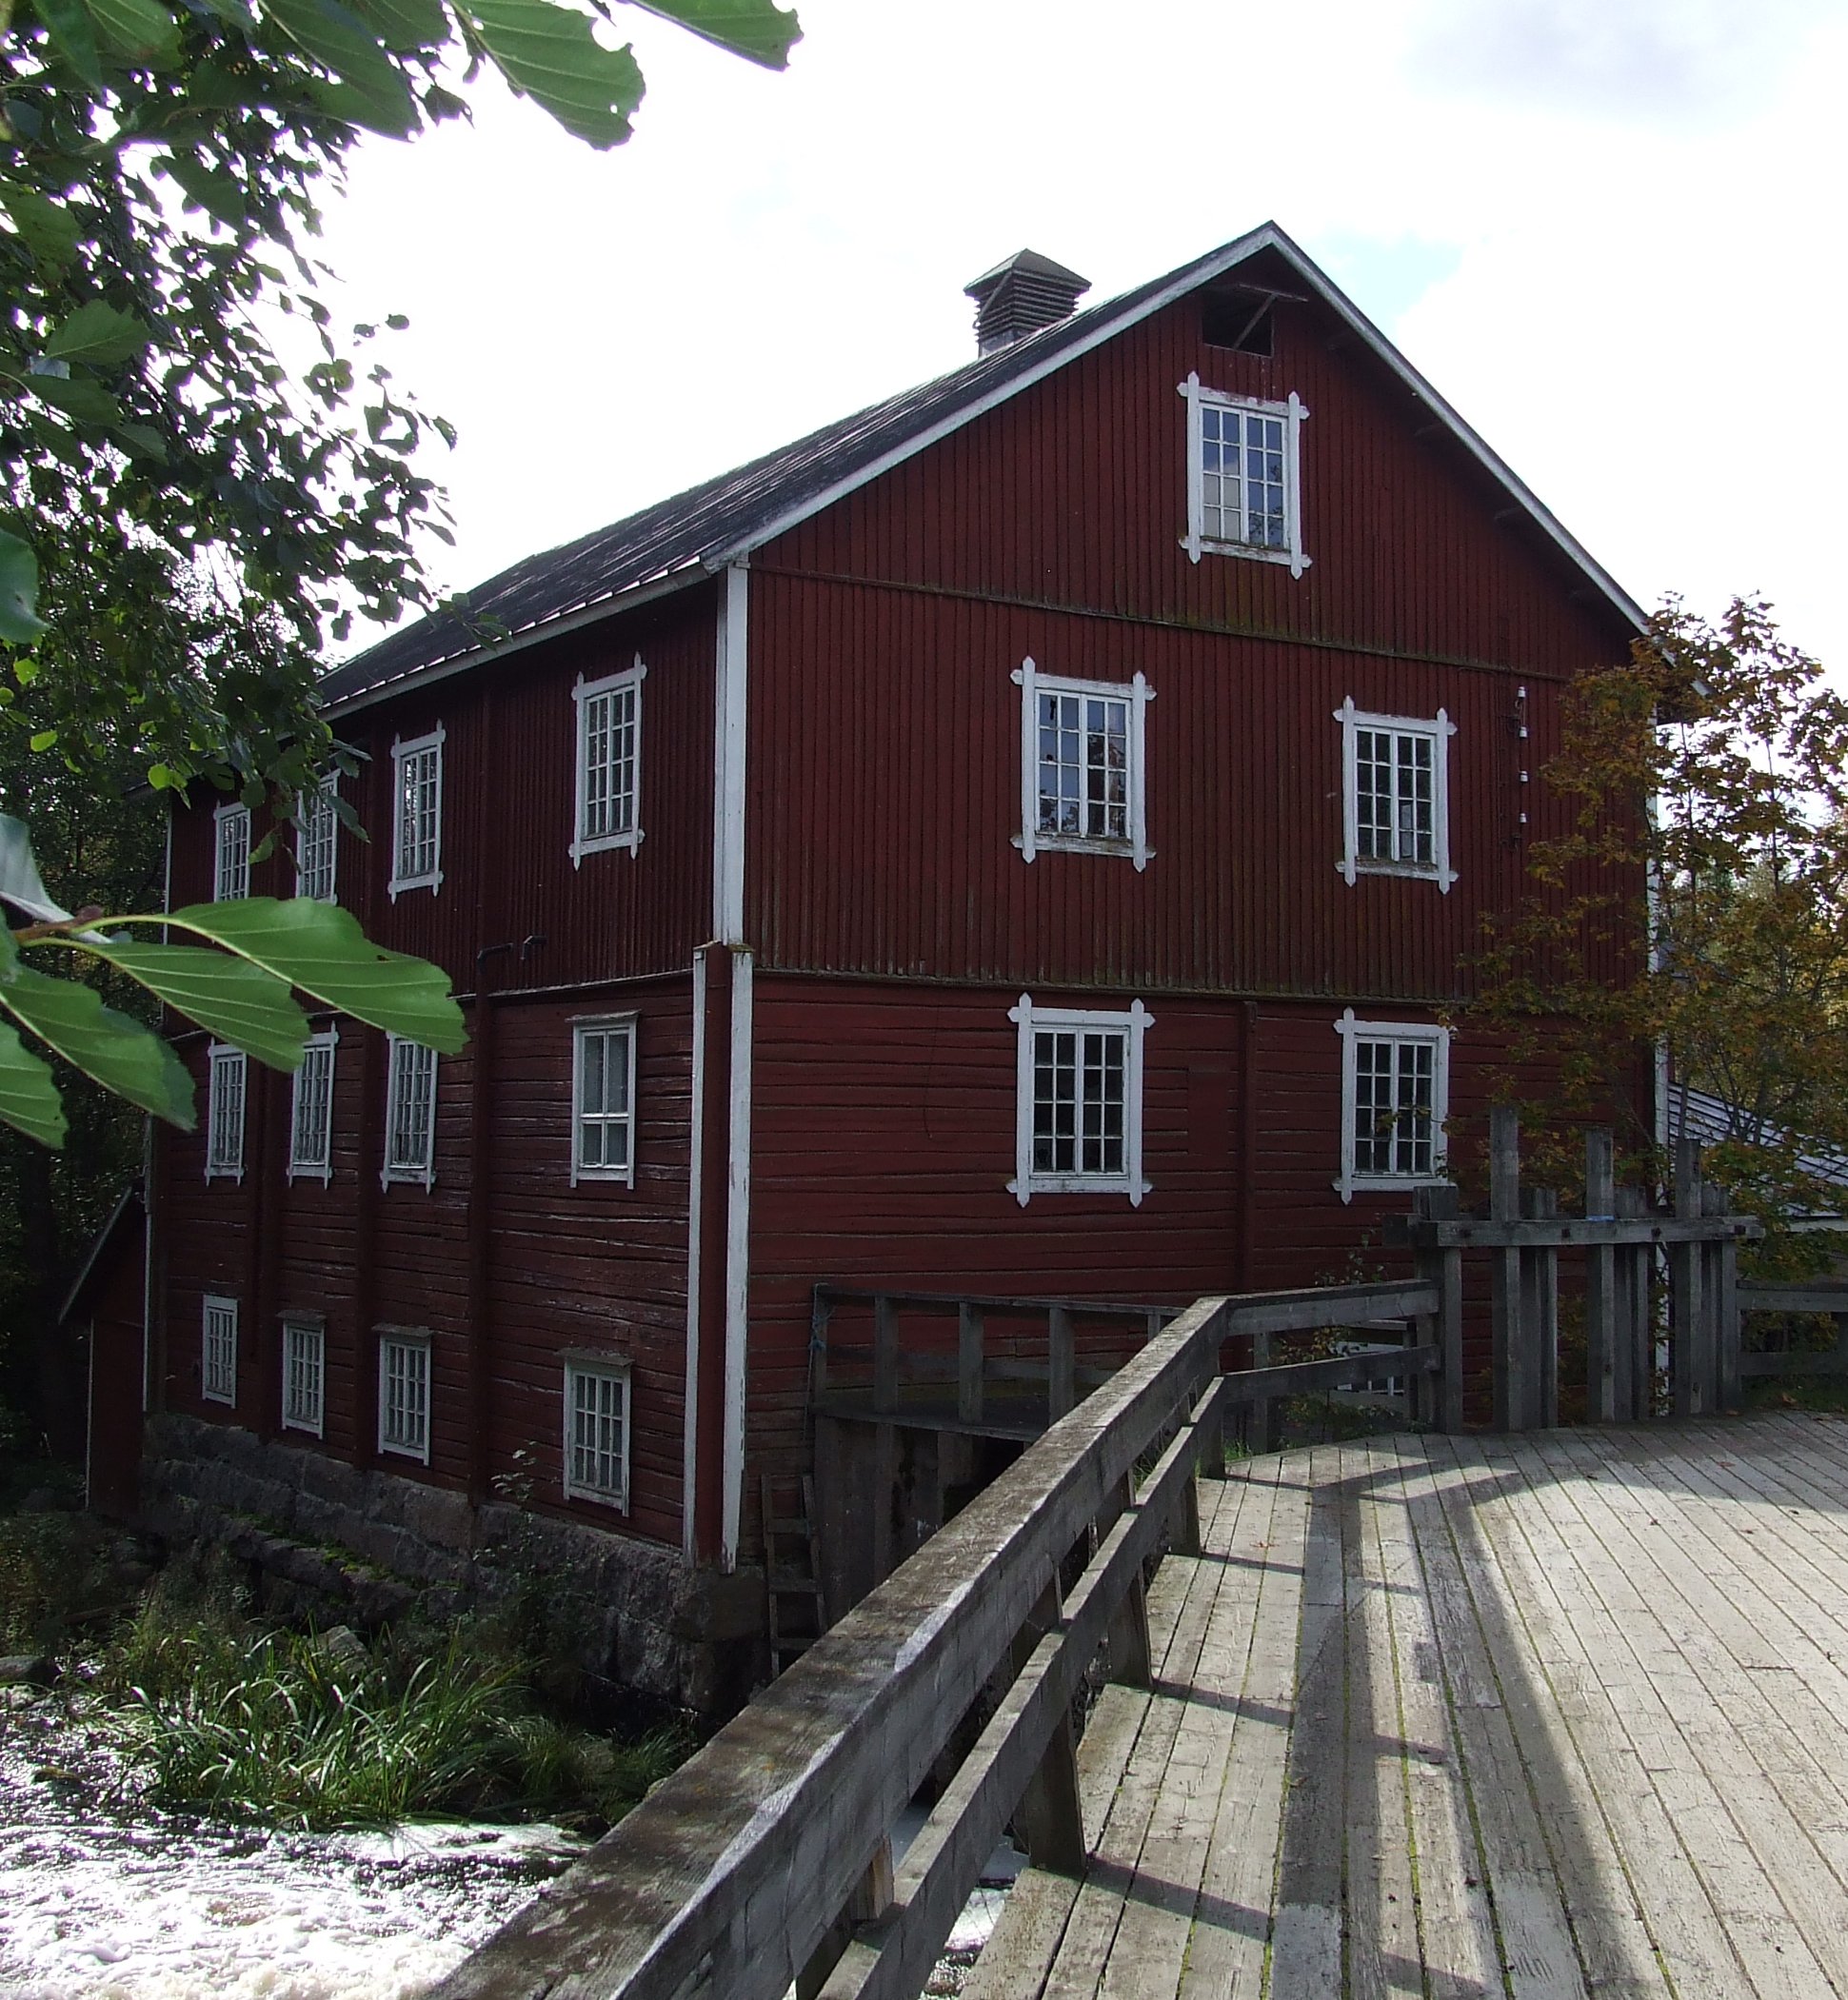 Myllykylä watermill